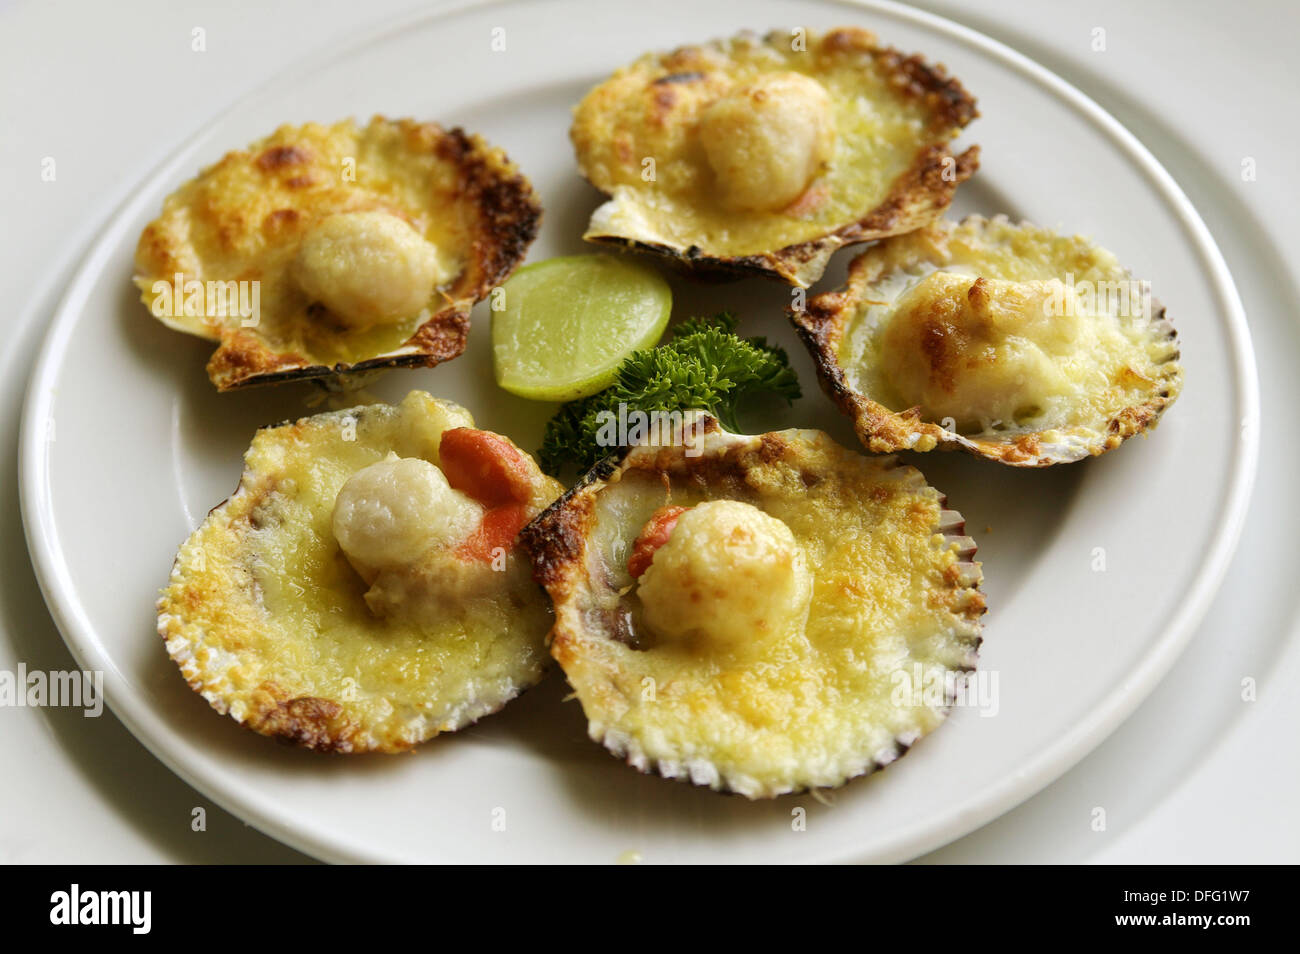 https://c8.alamy.com/comp/DFG1W7/gastronomy-conchitas-a-la-parmesana-scallops-on-their-shells-oven-DFG1W7.jpg